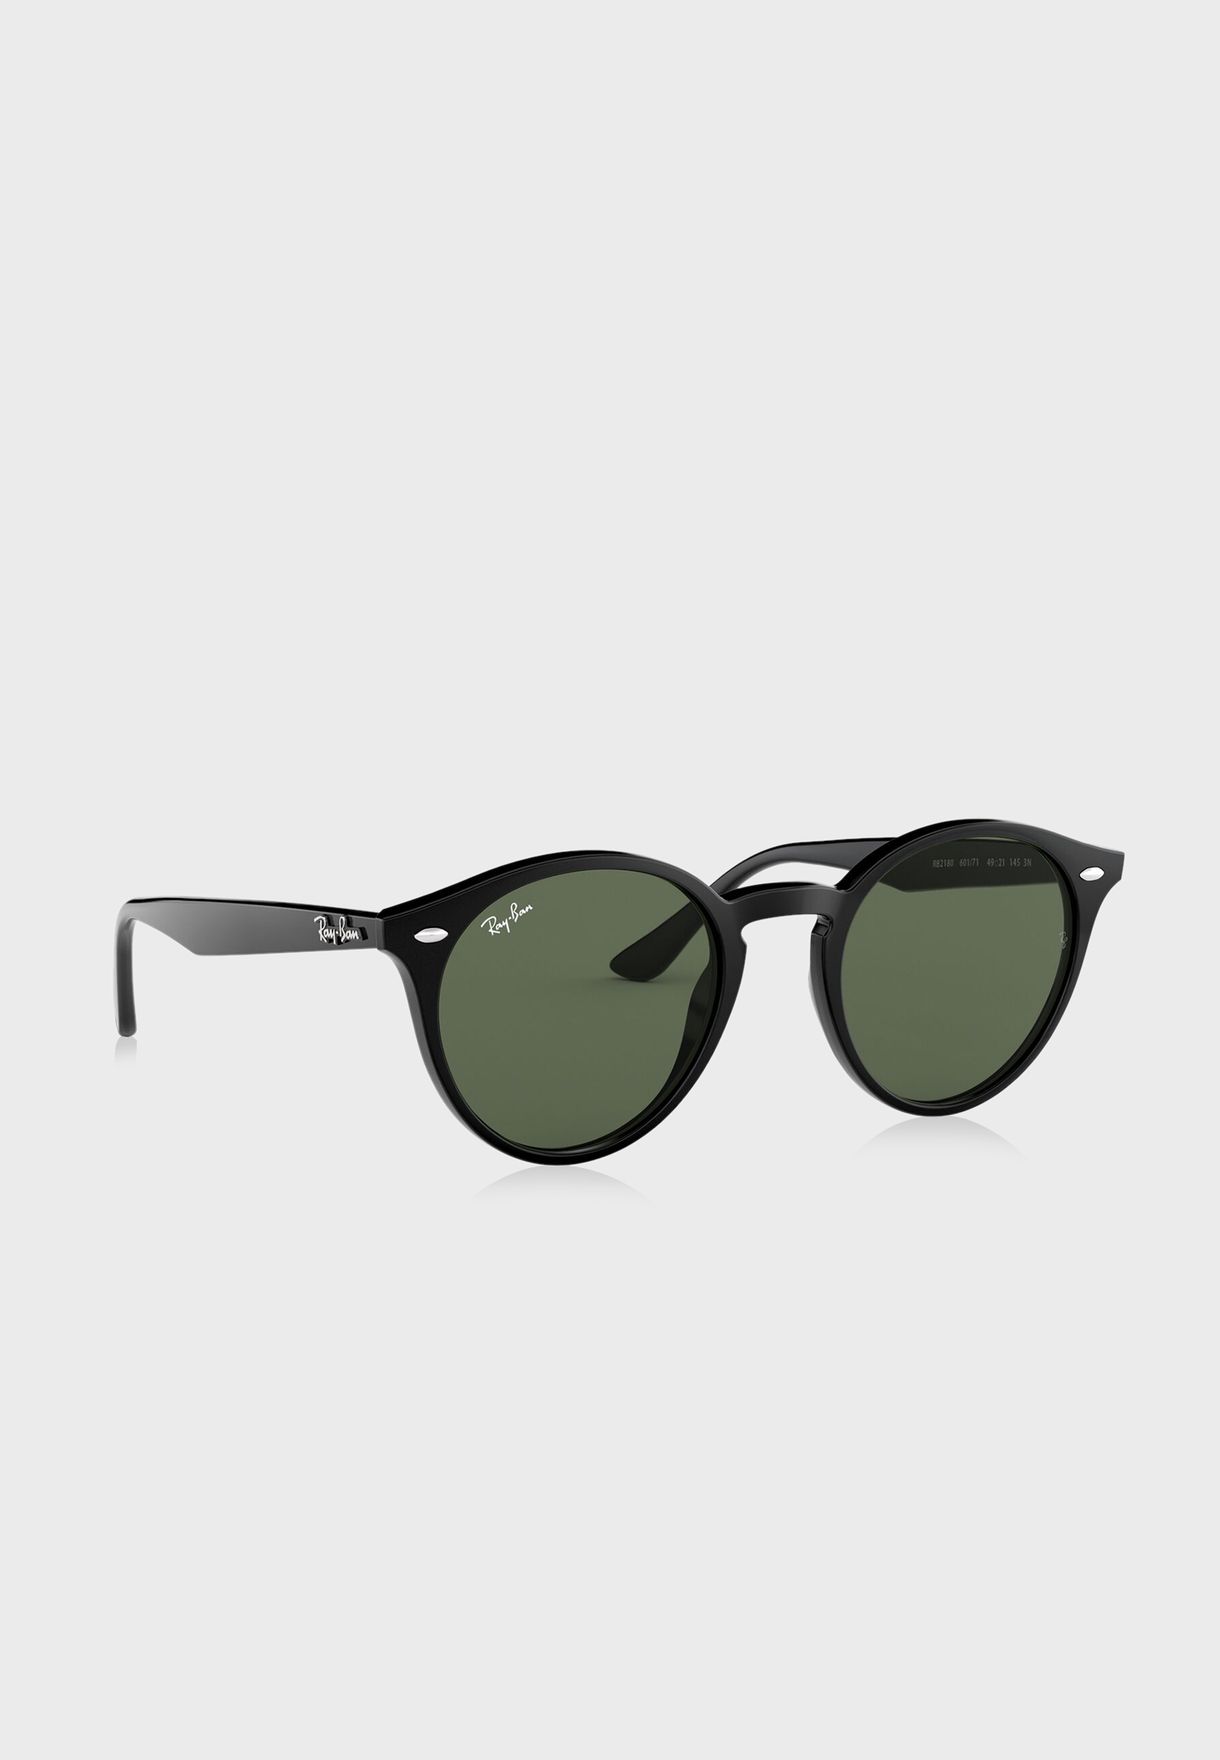 Buy Ray Ban Black 0rb2180 Phantos Sunglasses For Men In Mena Worldwide